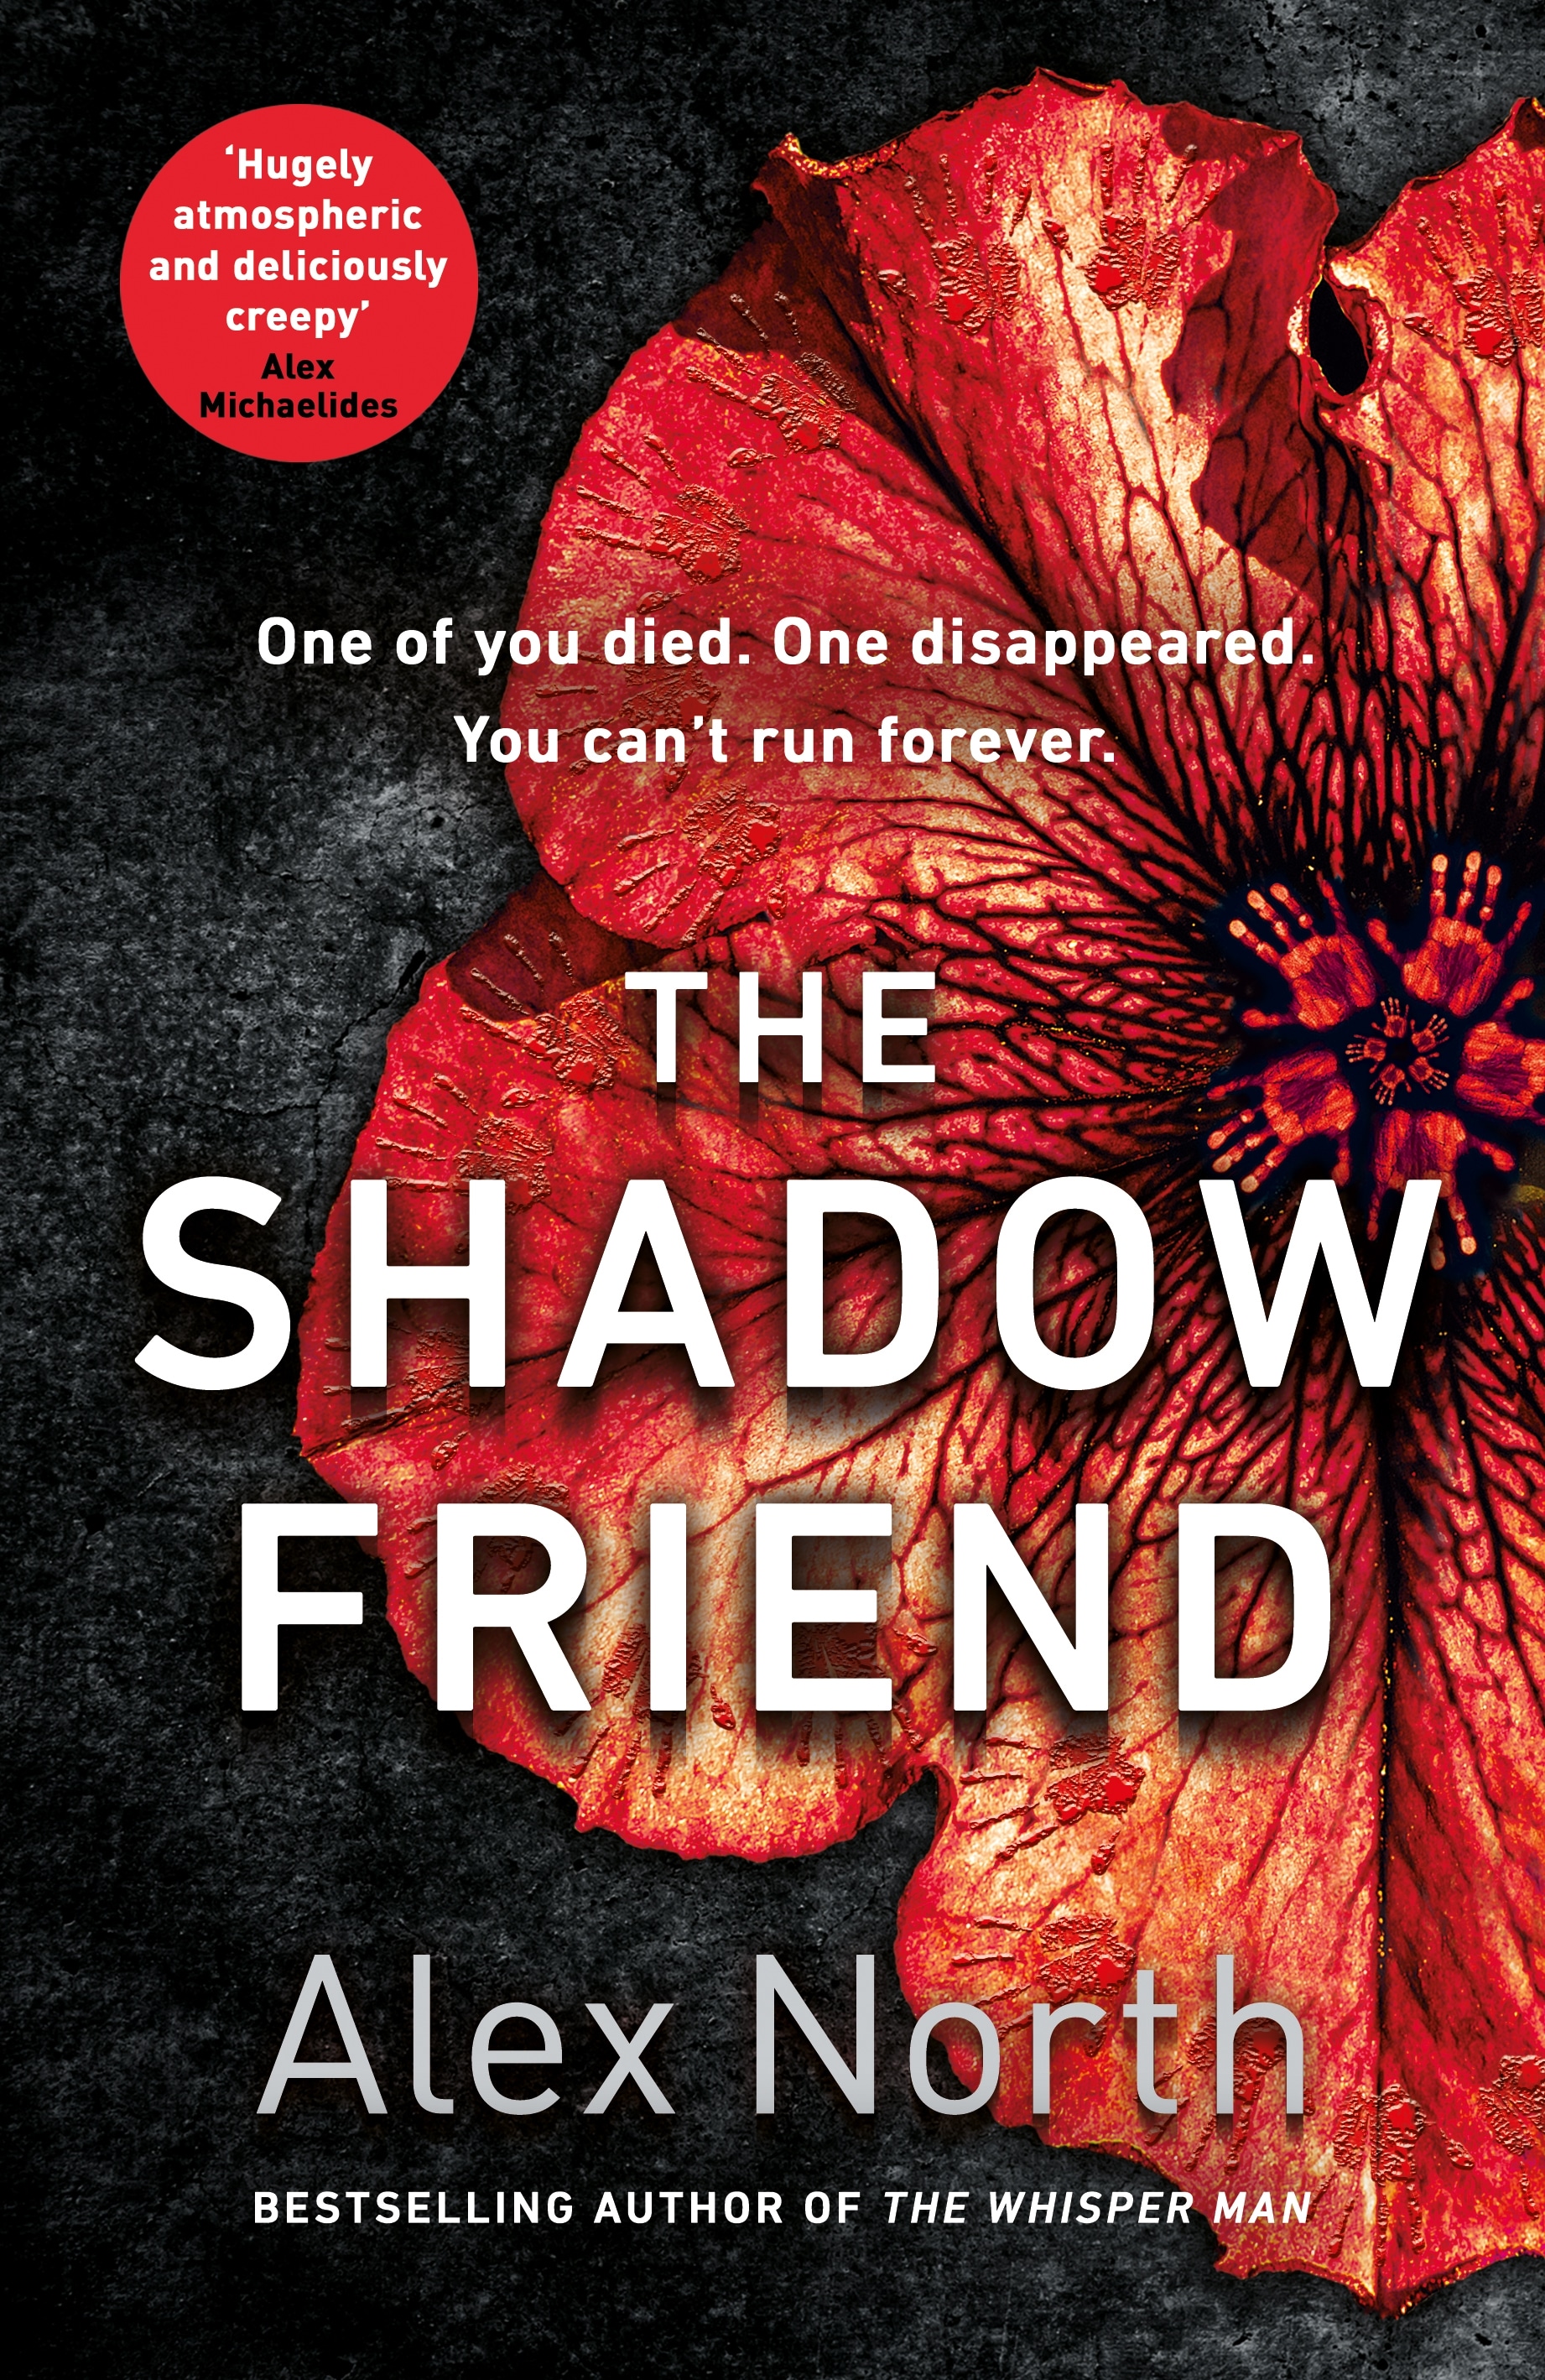 Book “The Shadow Friend” by Alex North — July 9, 2020